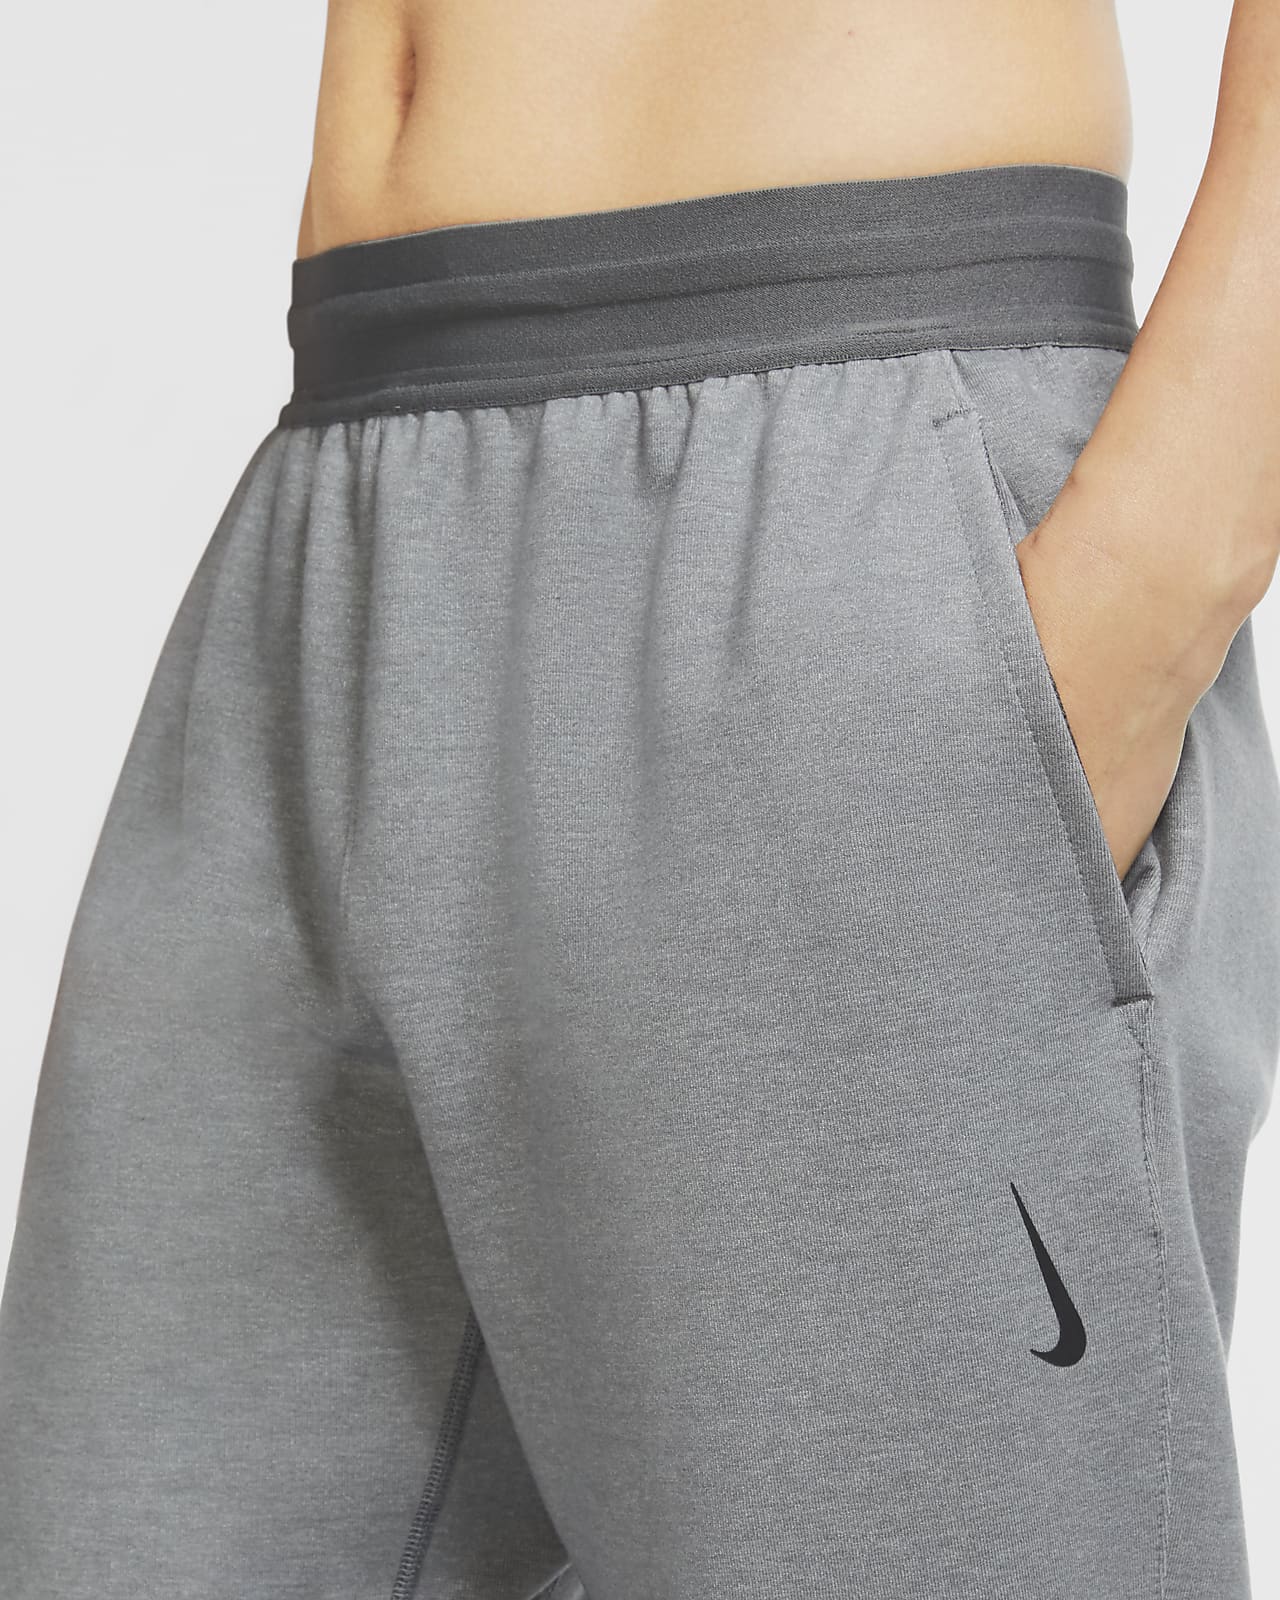 Nike Black Active Pants Size XL - 52% off